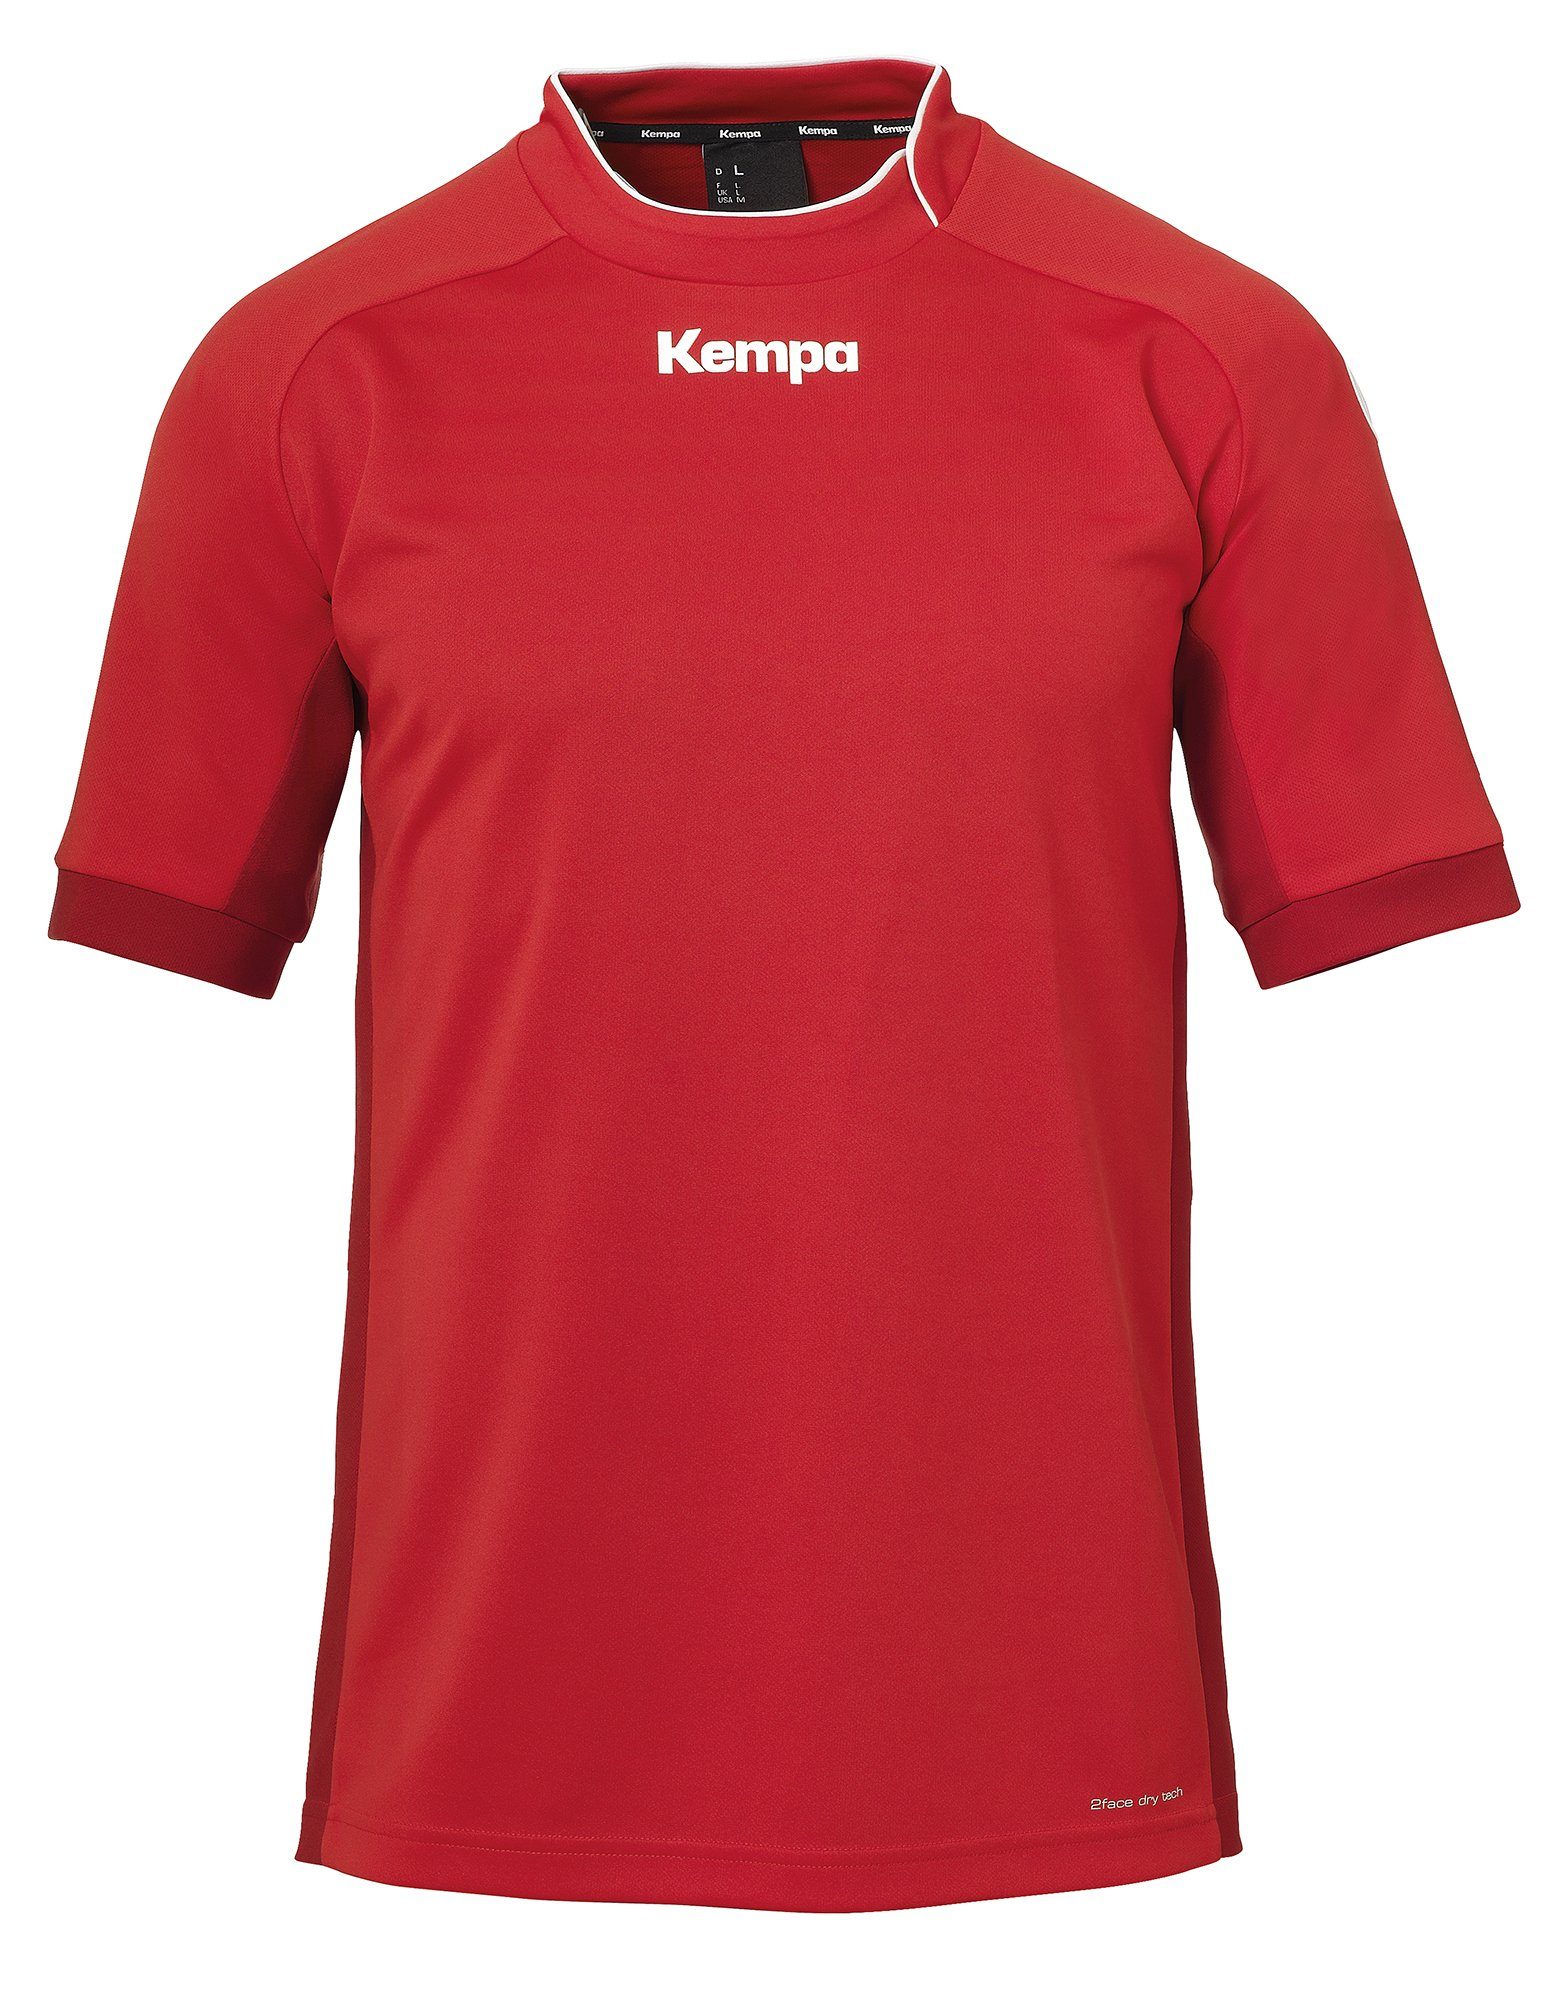 rot/chilirot Kempa schnelltrocknend PRIME Kempa Trainingsshirt Shirt TRIKOT